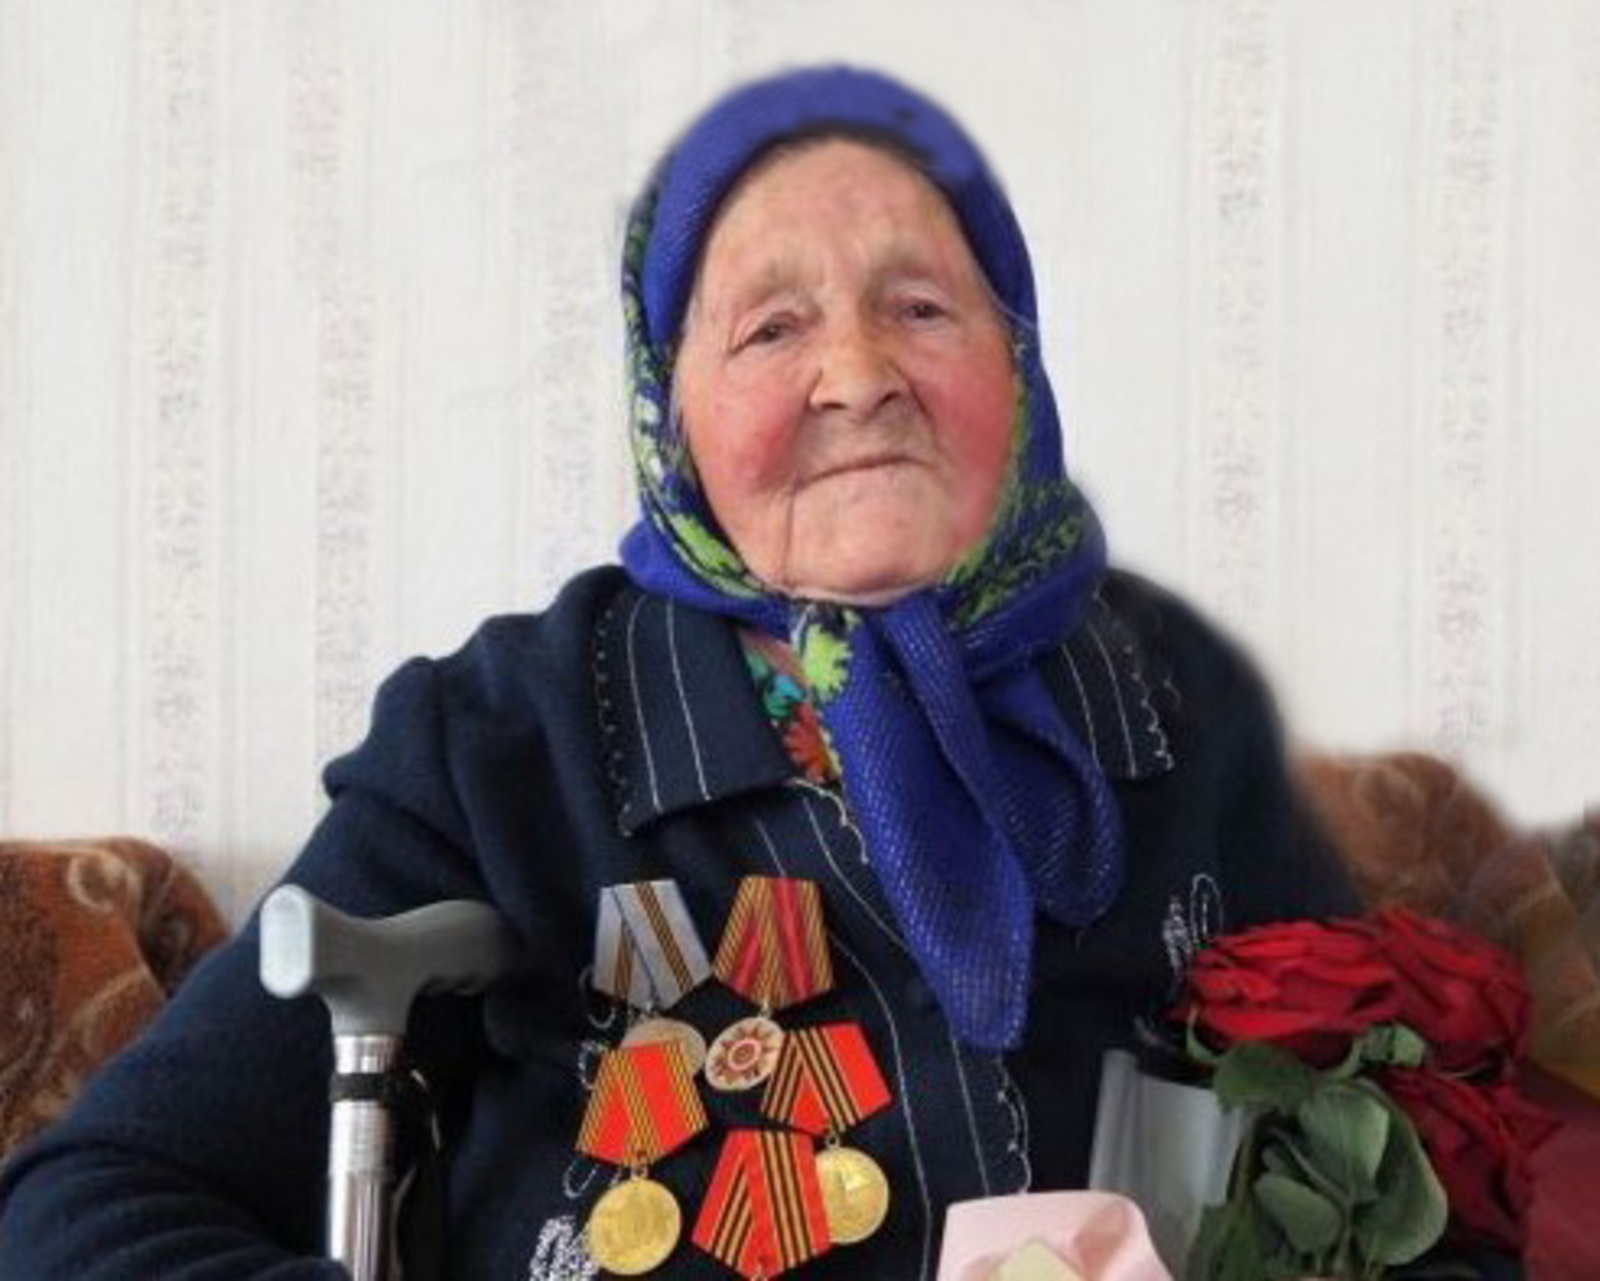 Усăллăри Дарья Патраева  95 çулхи юбилейне паллă тунă